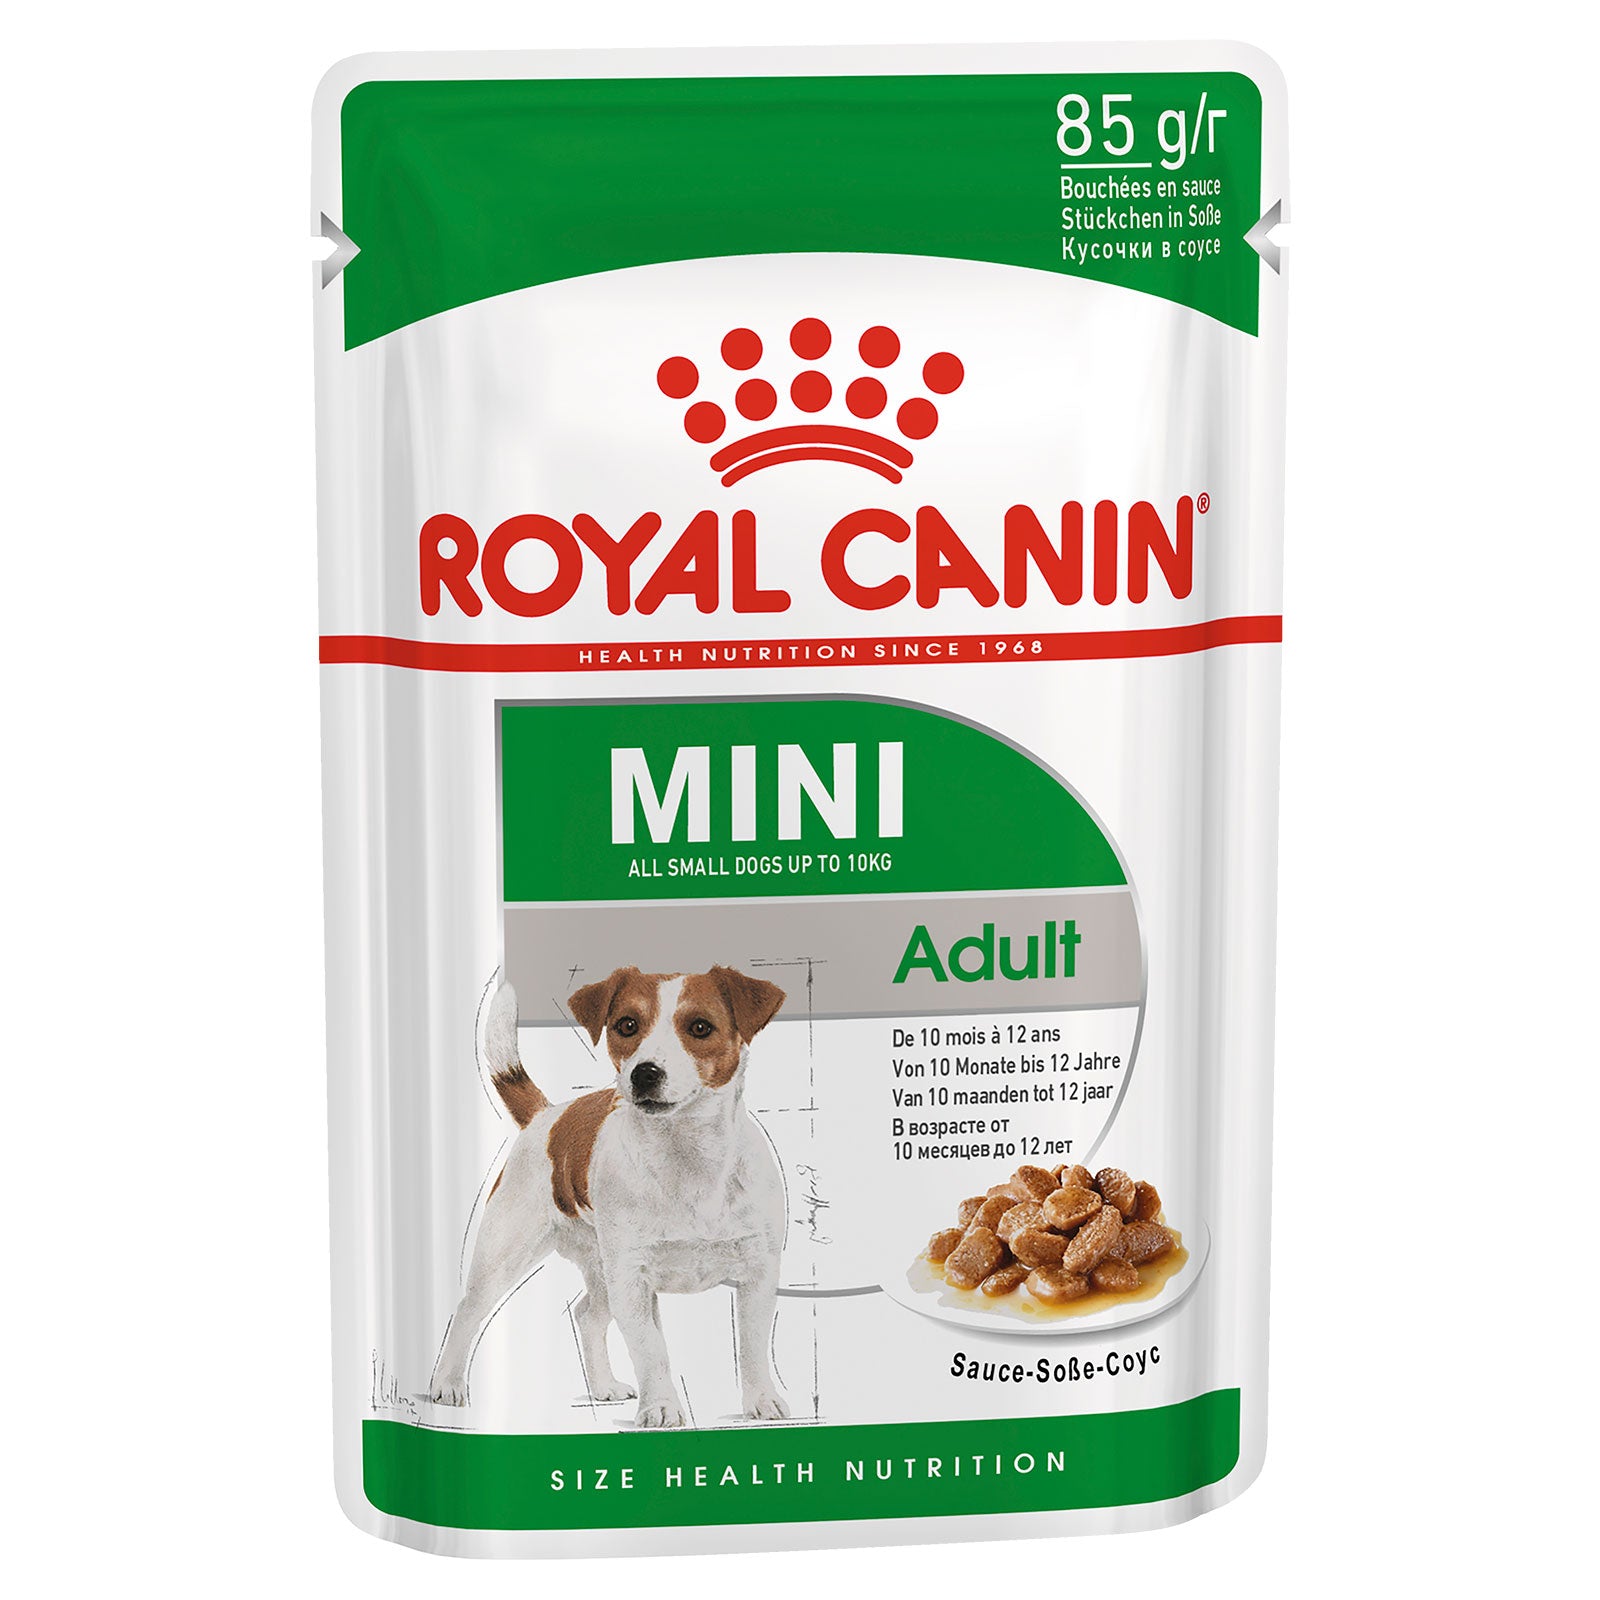 Royal Canin Dog Food Pouch Adult Mini